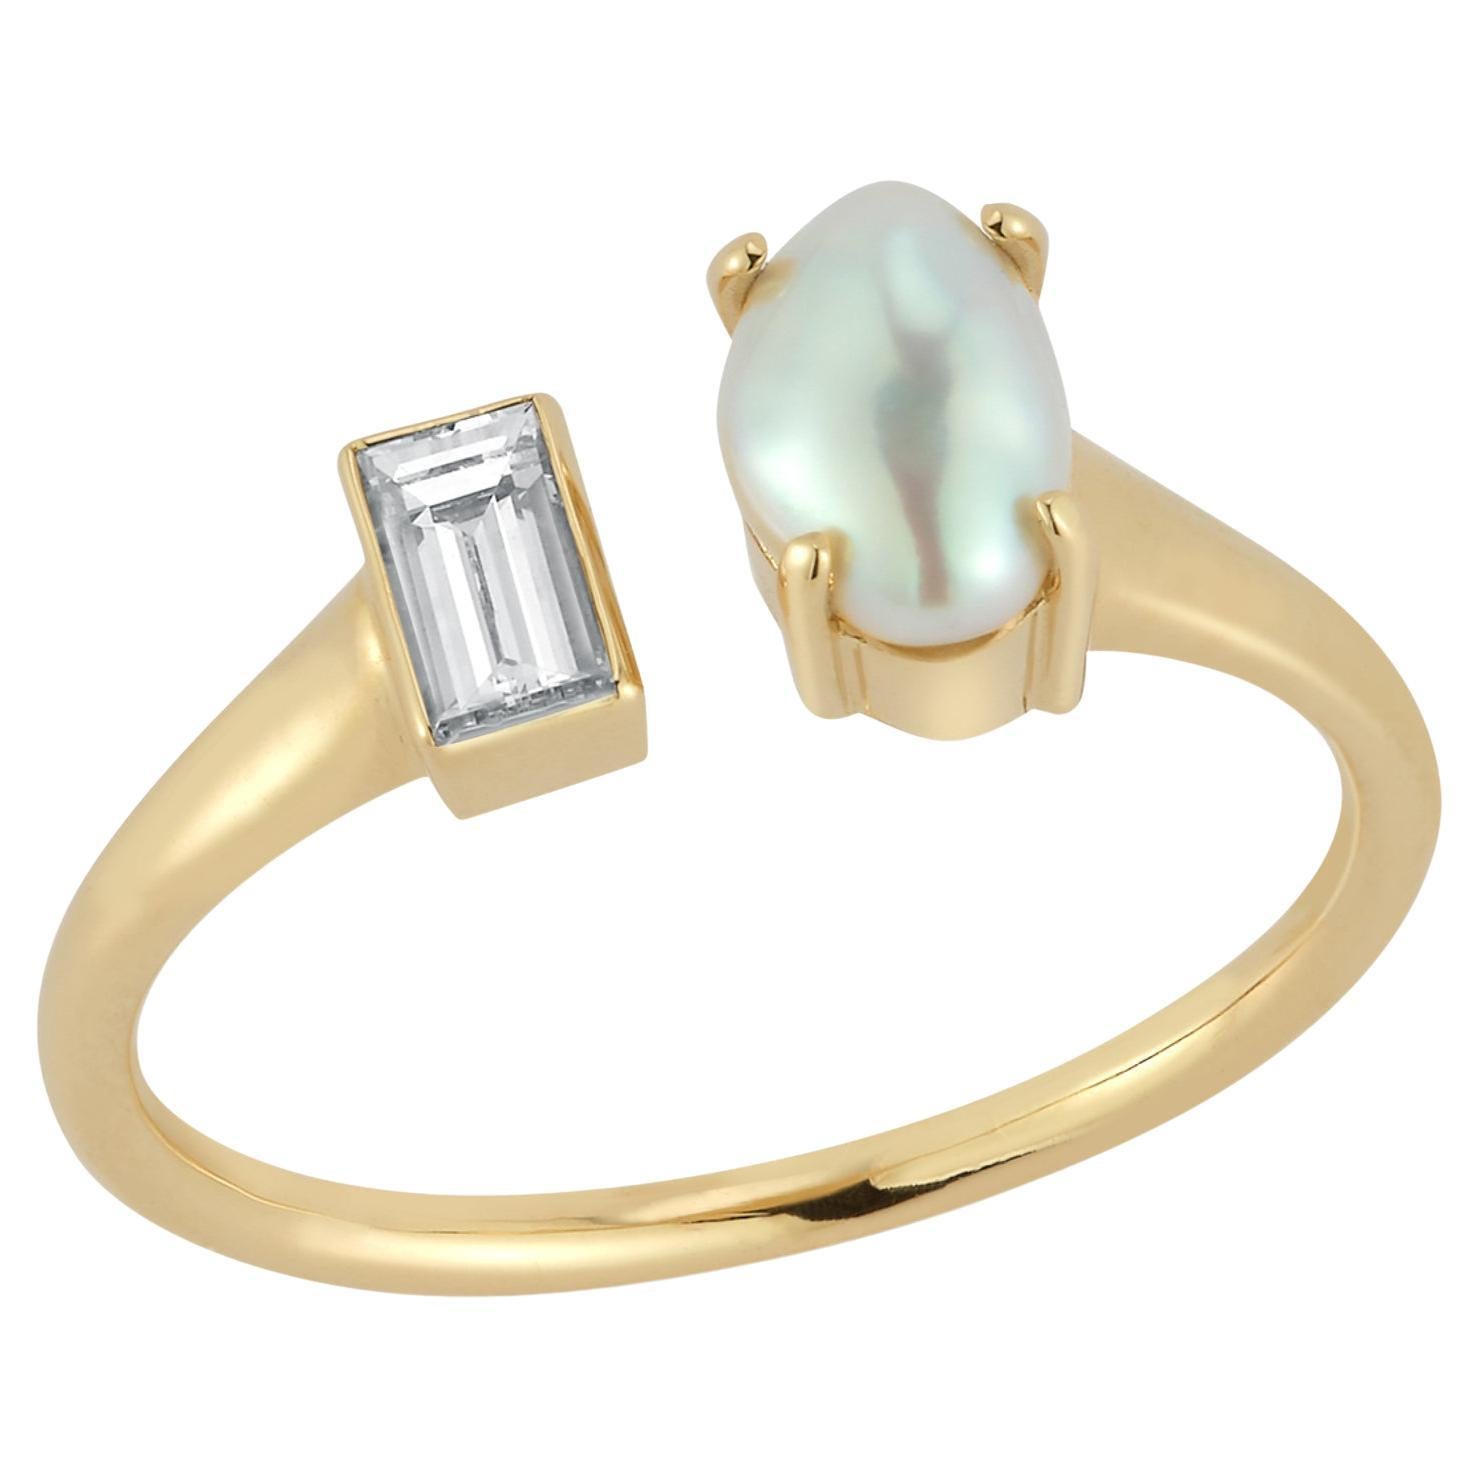 For Sale:  0.10 Carat Diamond and Pearl Toi et Moi Engagement Ring Hi June Parker